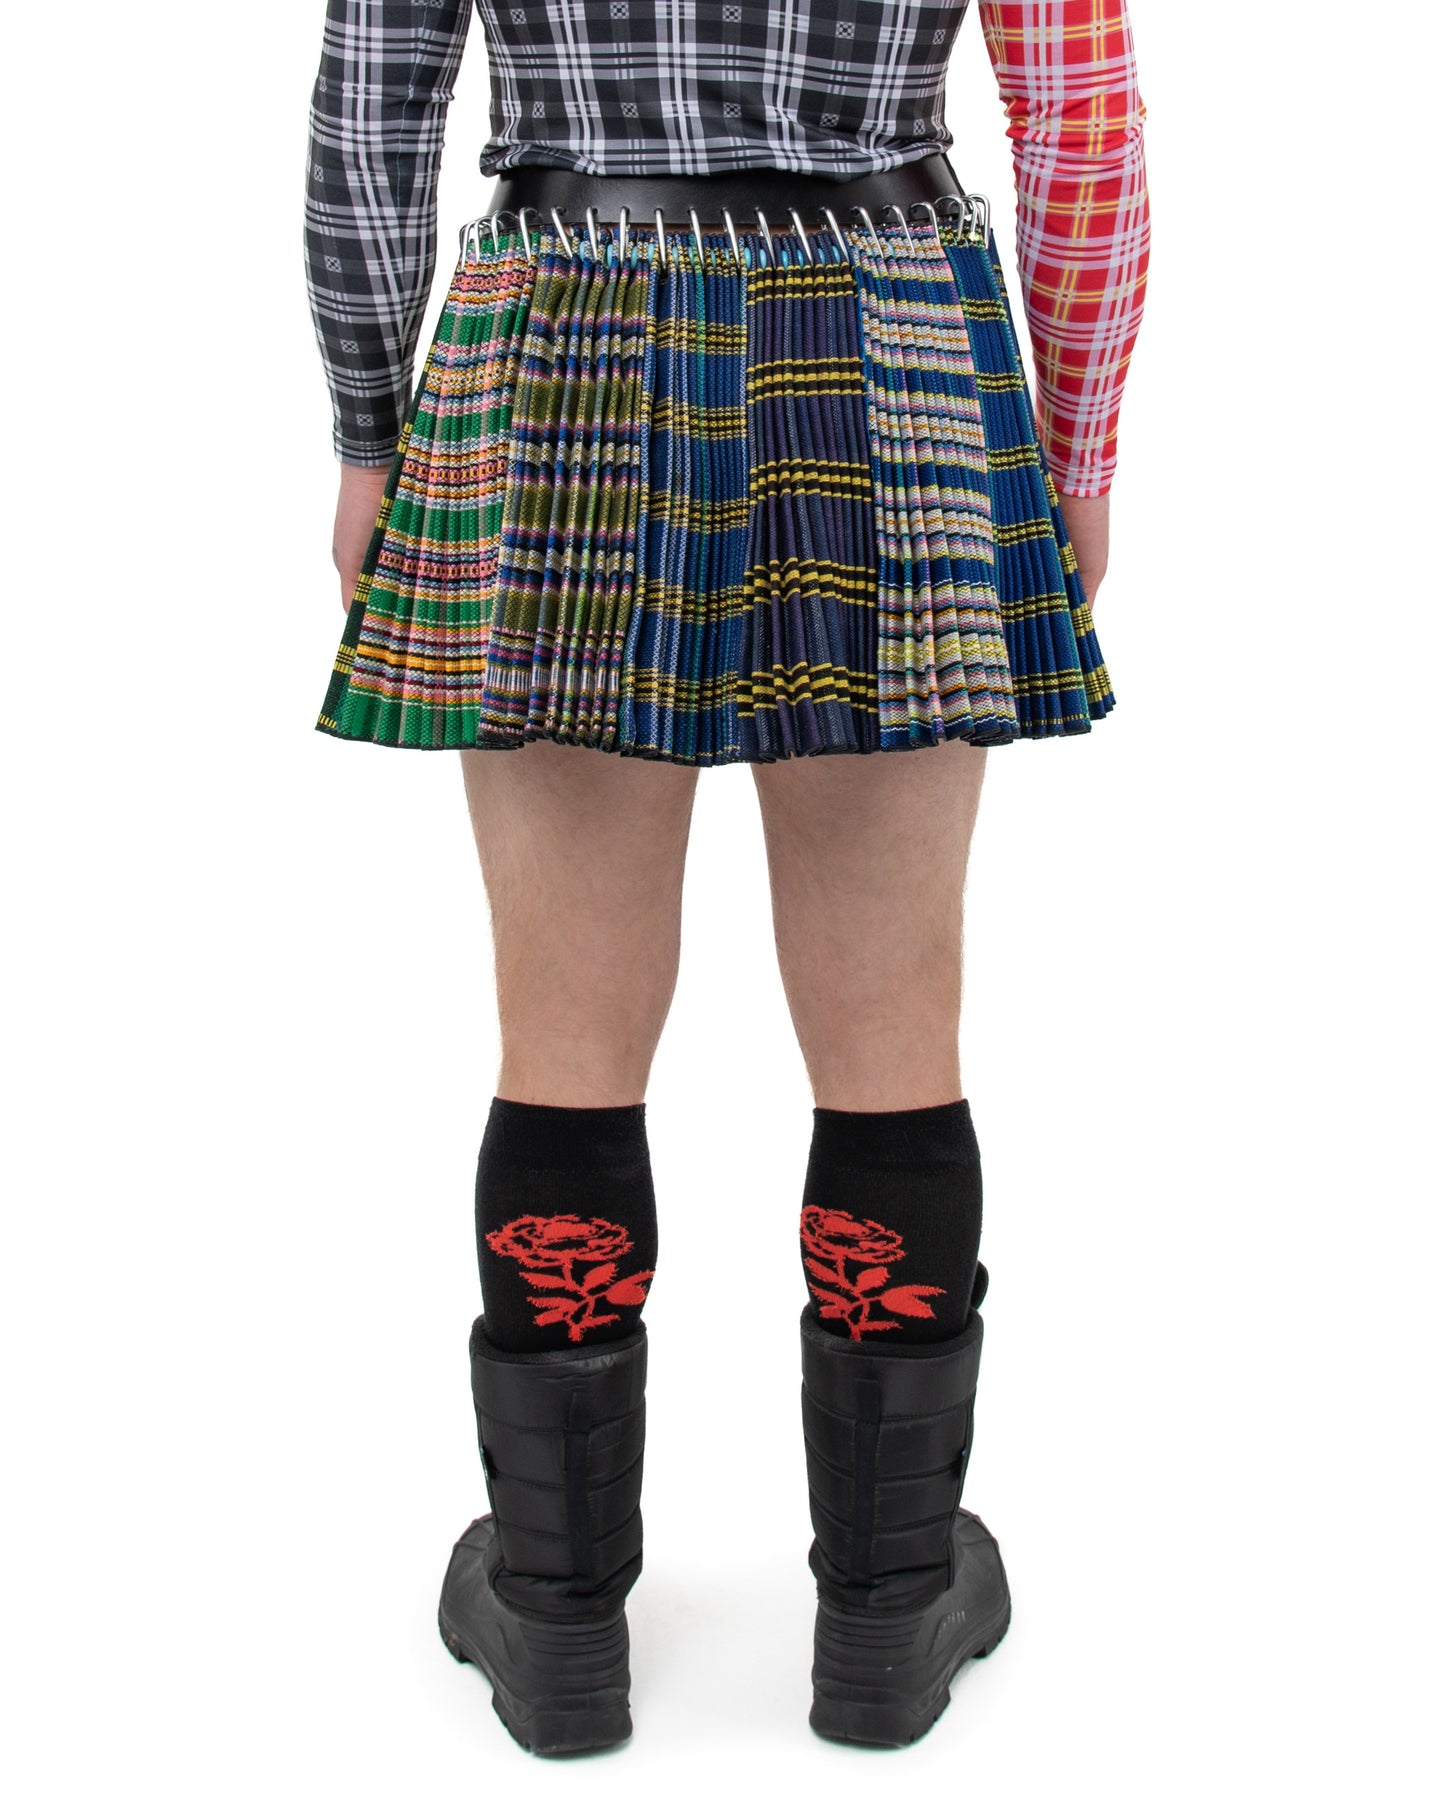 Erica Carabiner Mini Skirt